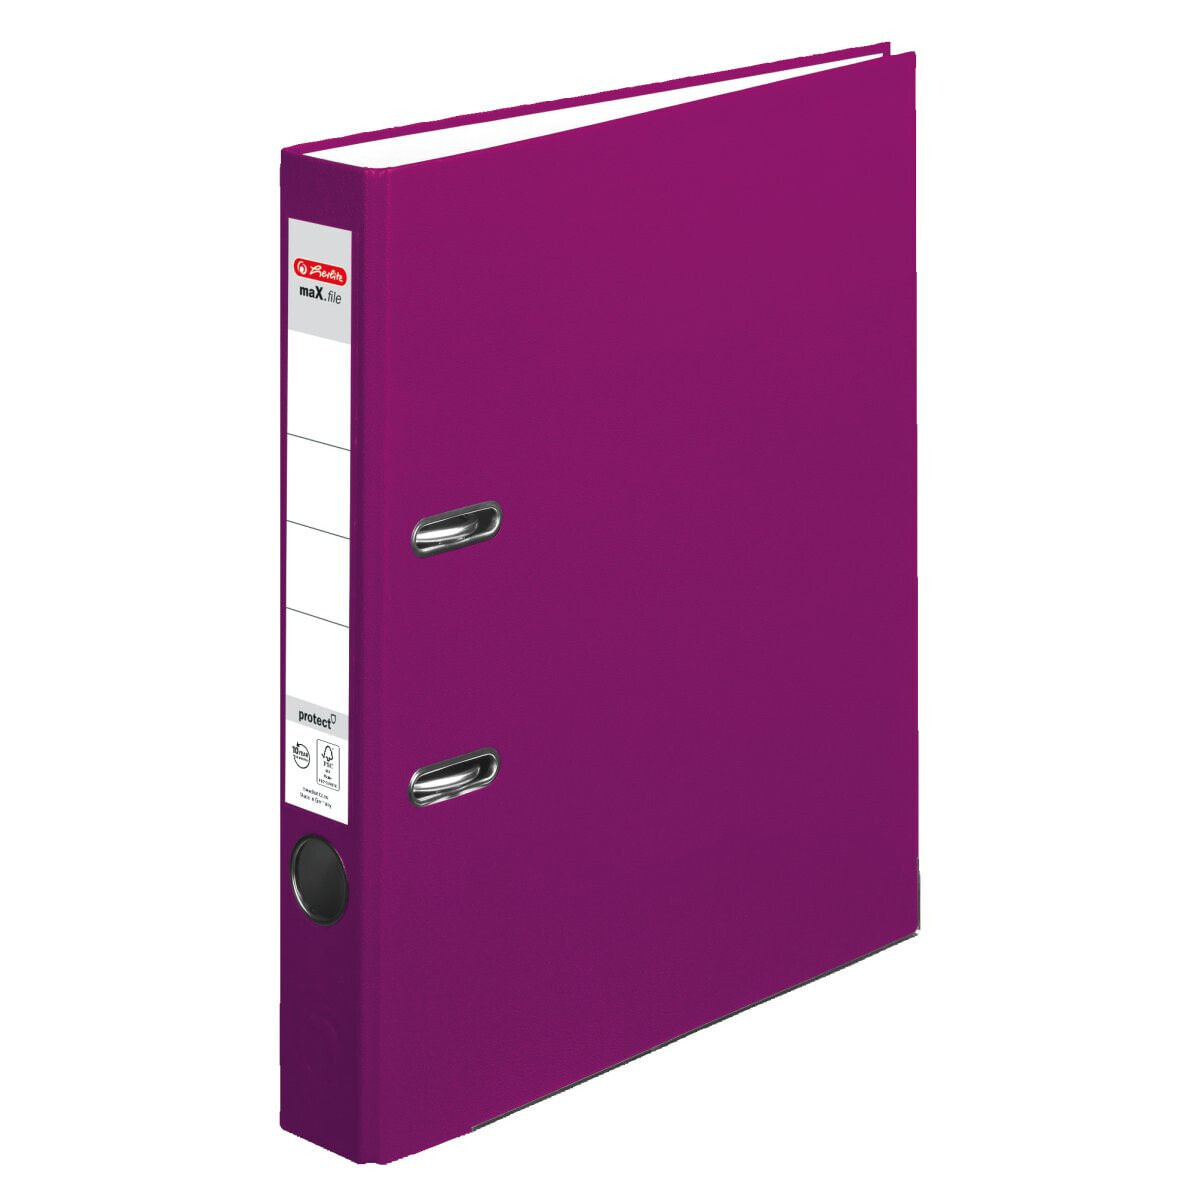 maX.file - A4 - Storage - Polypropylene (PP) - Purple - Lever - 1 pc(s)